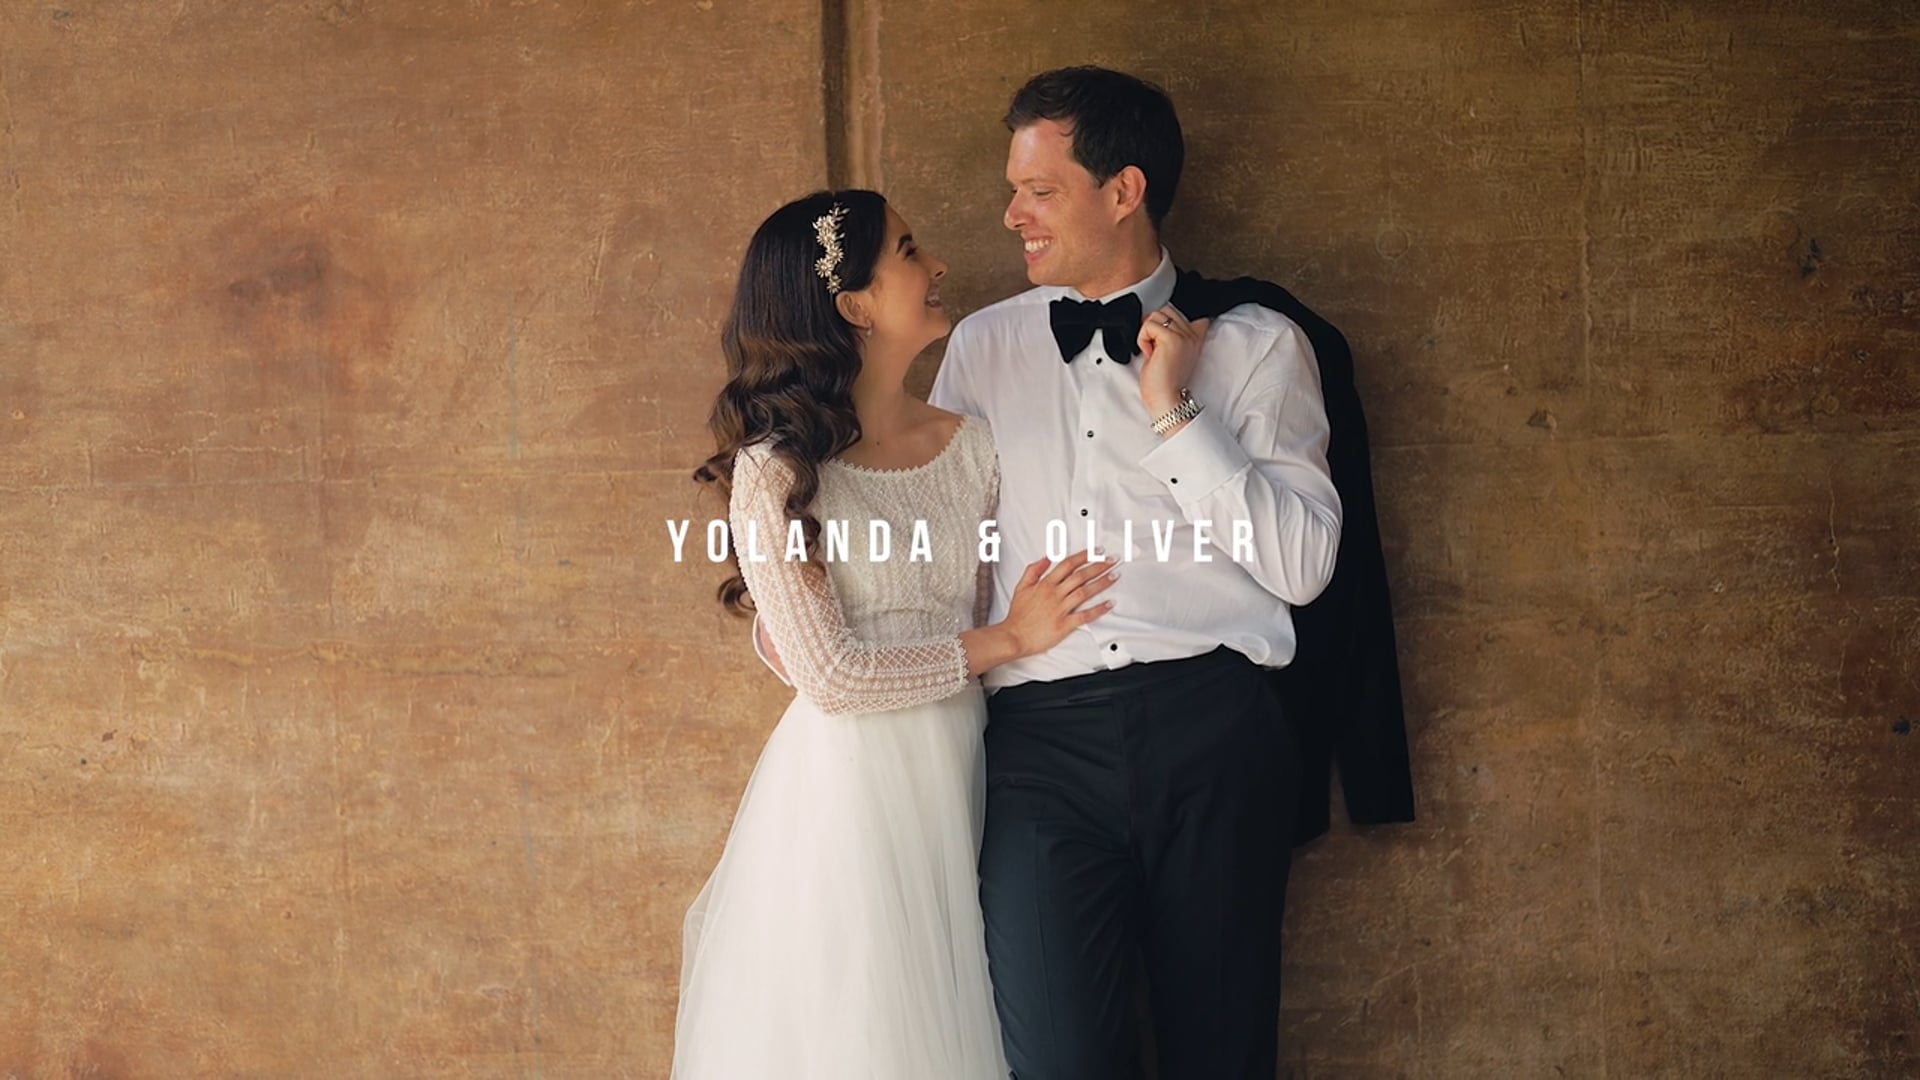 Yolanda & Oliver - Trailer (4K)